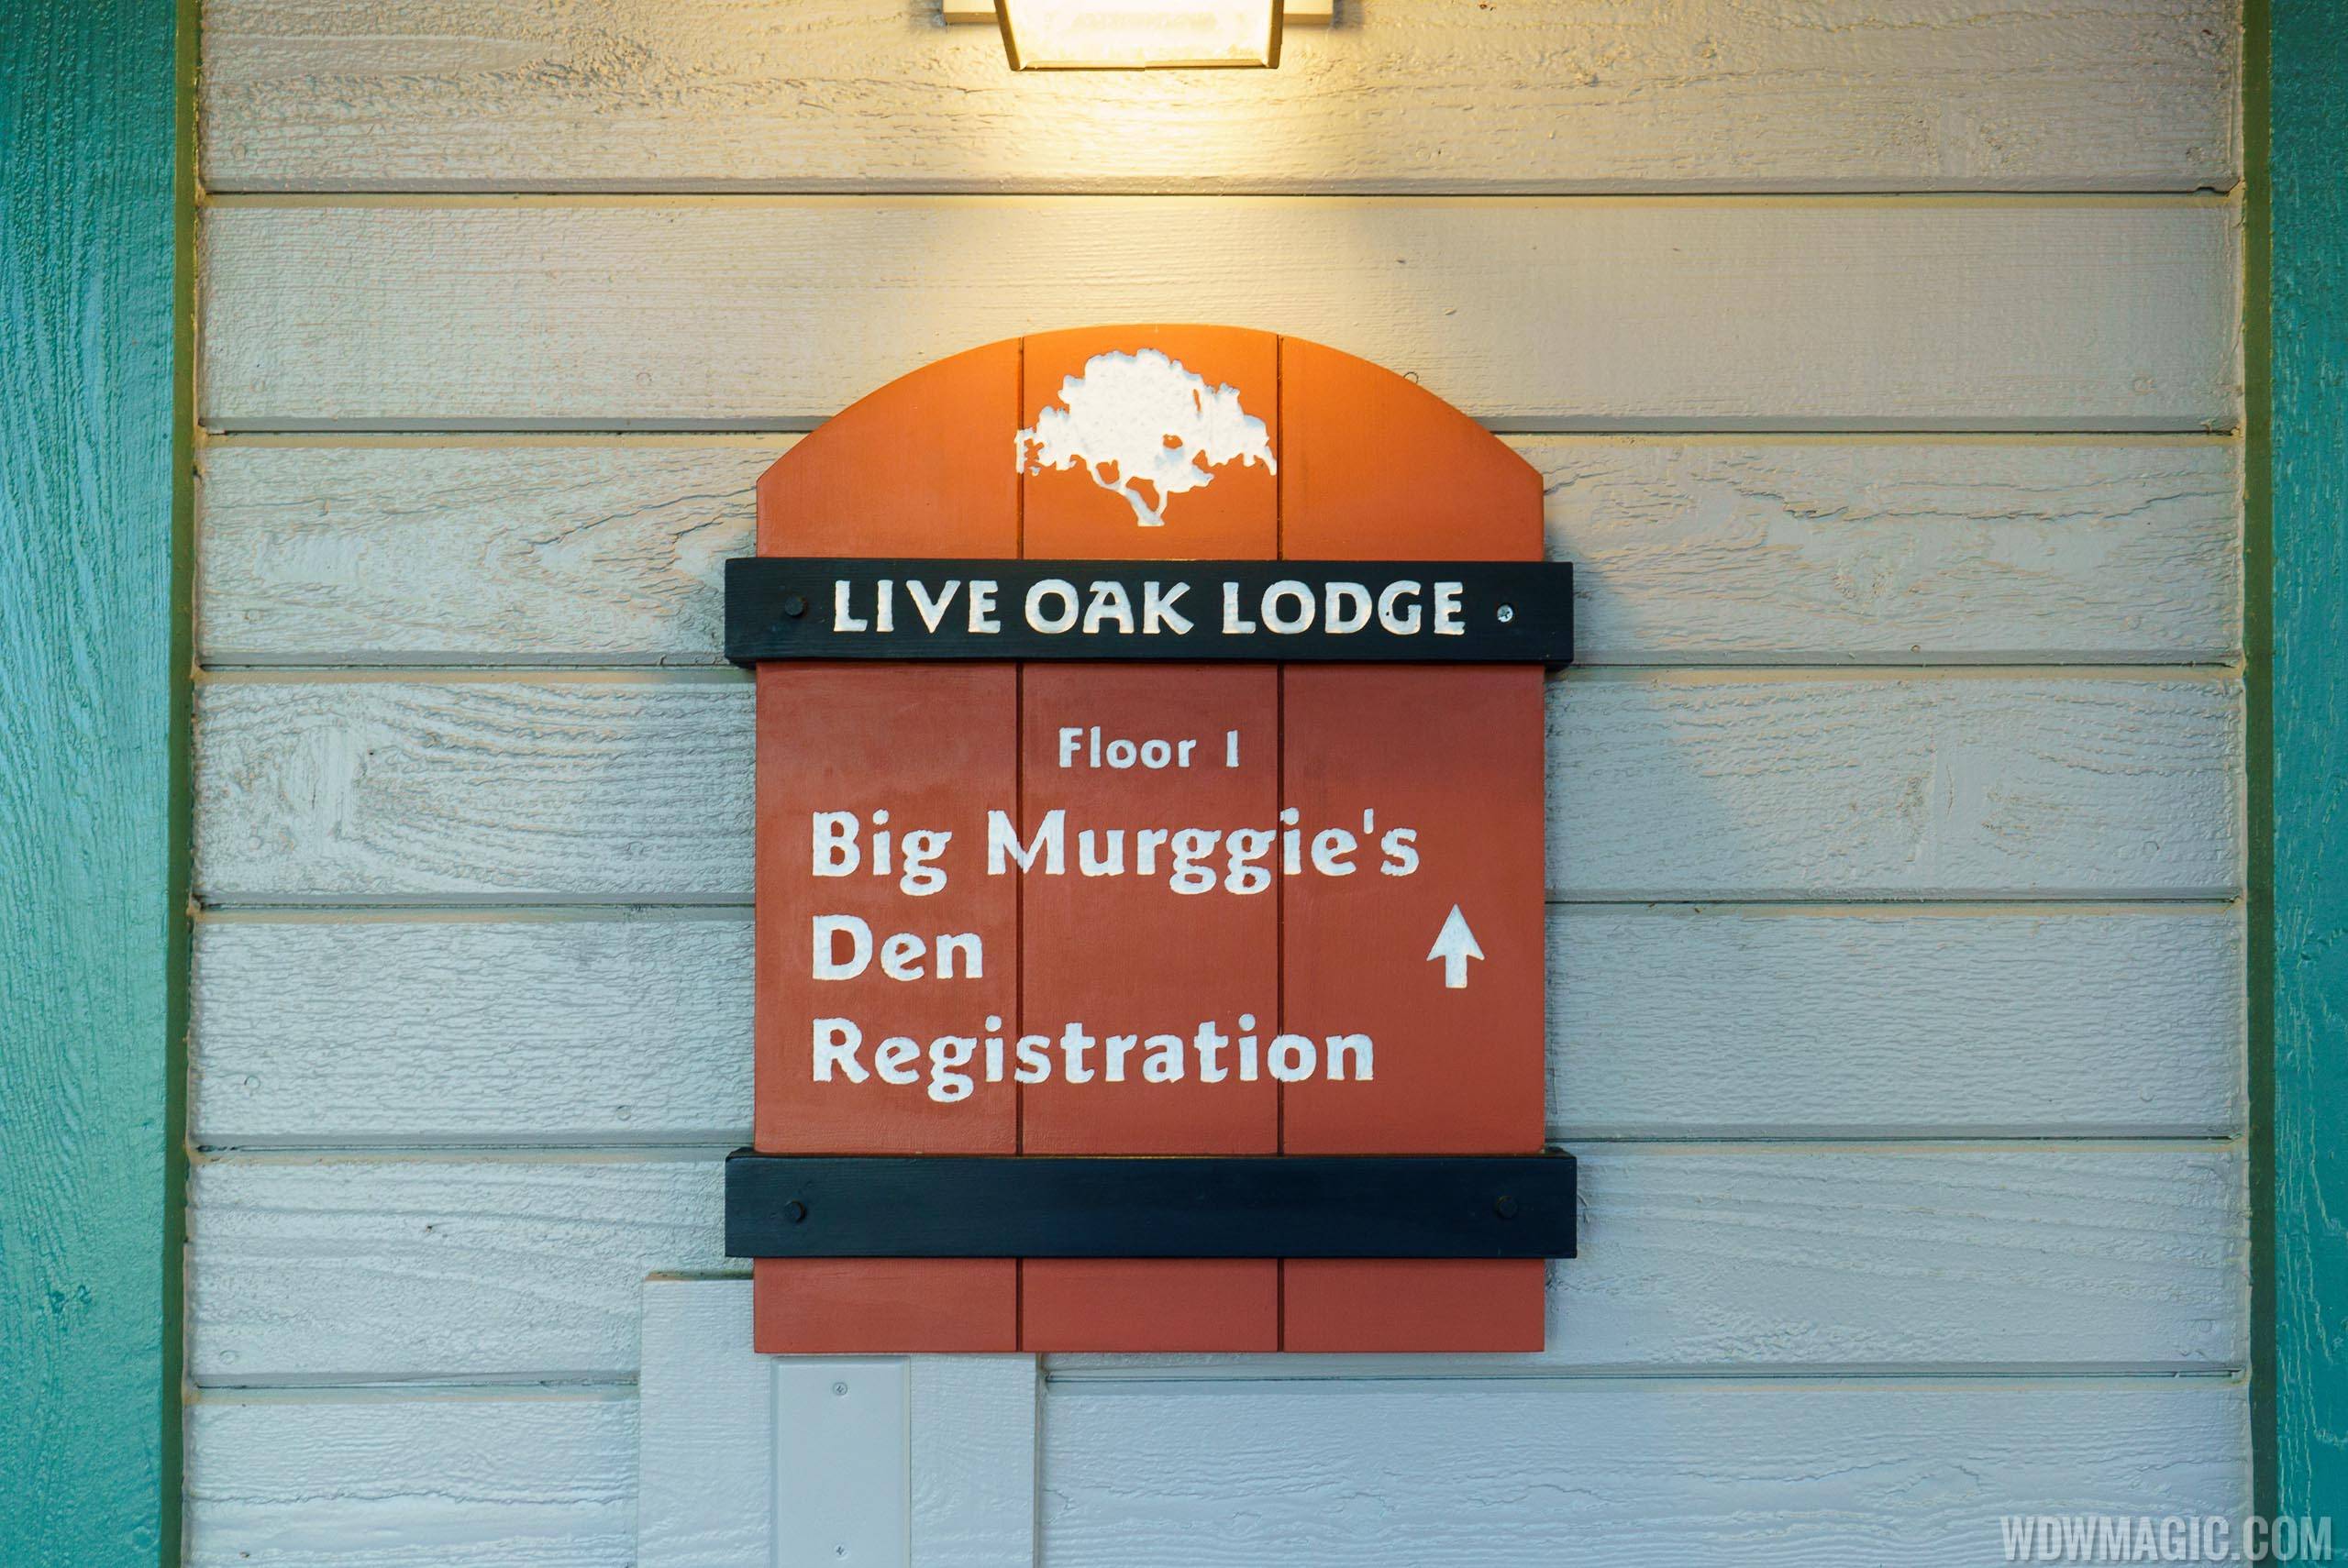 Disney's Hilton Head Island Resort - Live Oak Lodge sign